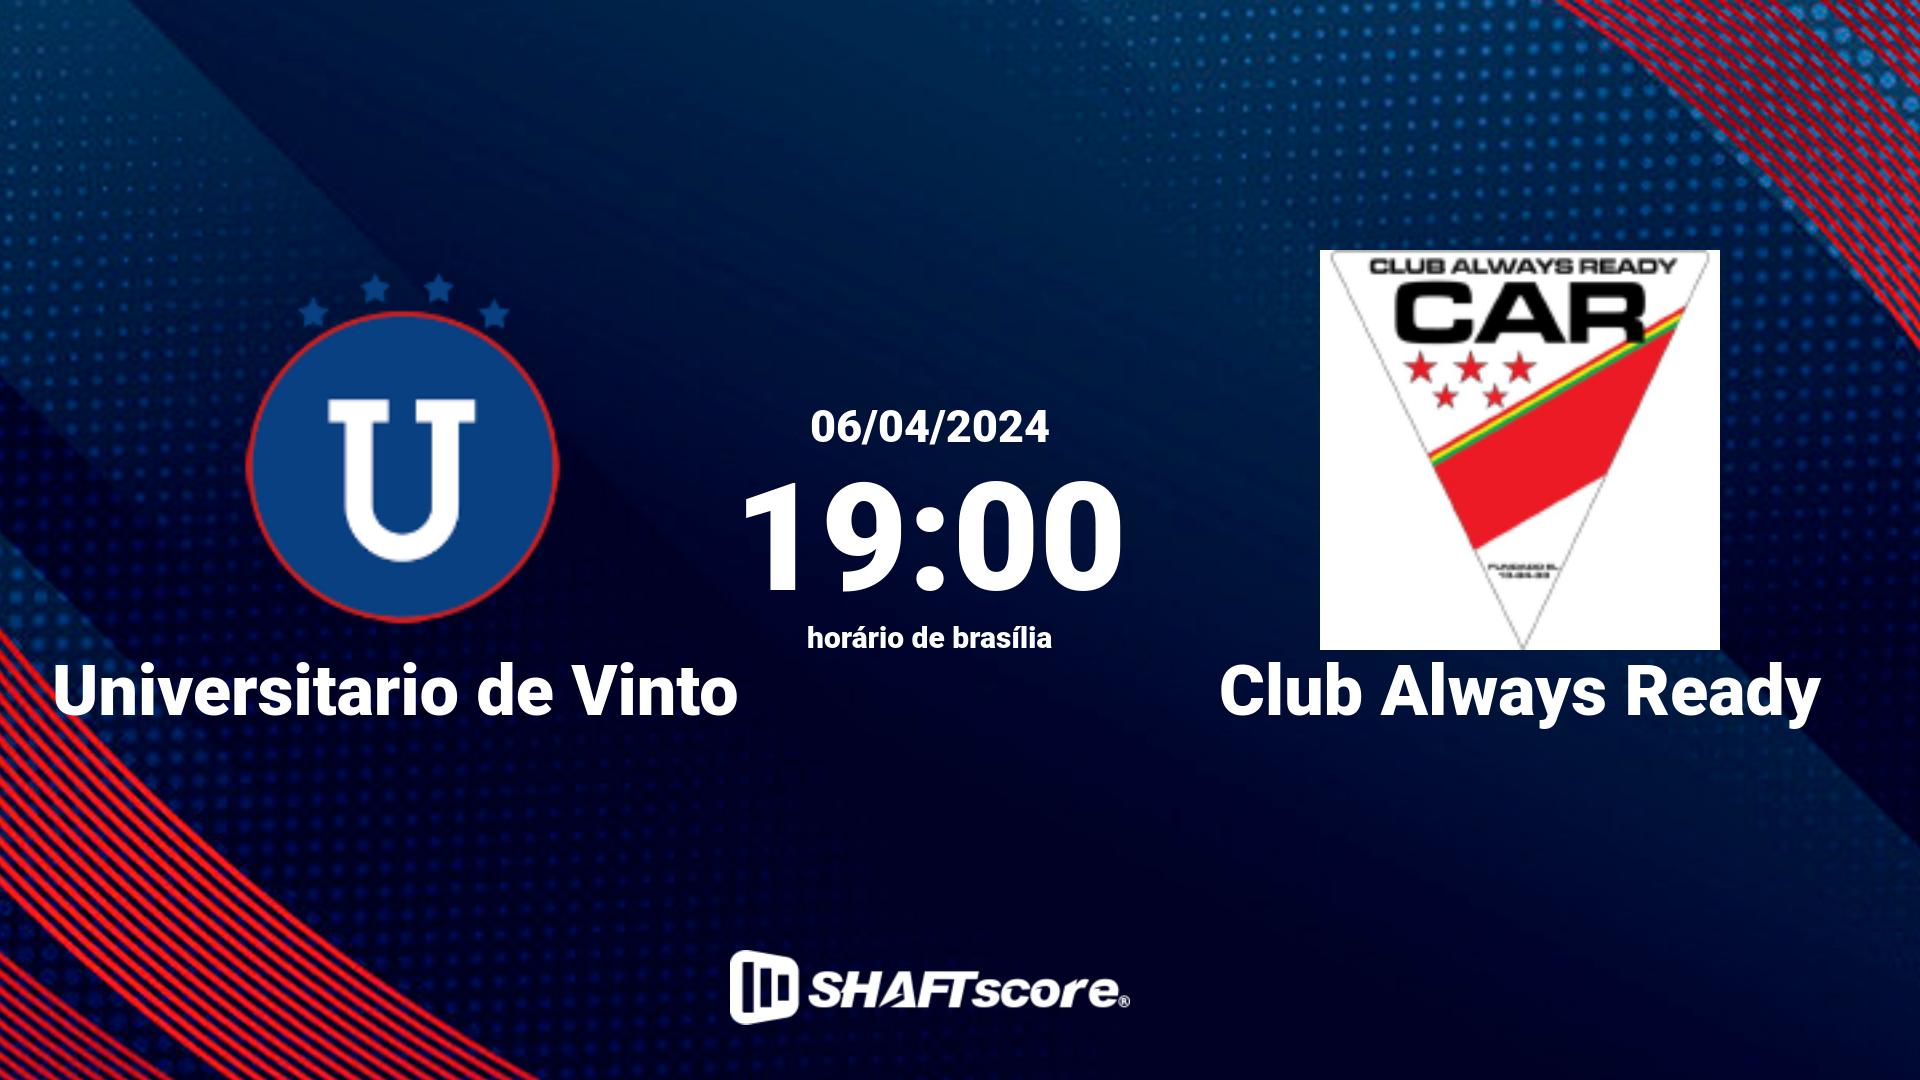 Estatísticas do jogo Universitario de Vinto vs Club Always Ready 06.04 19:00